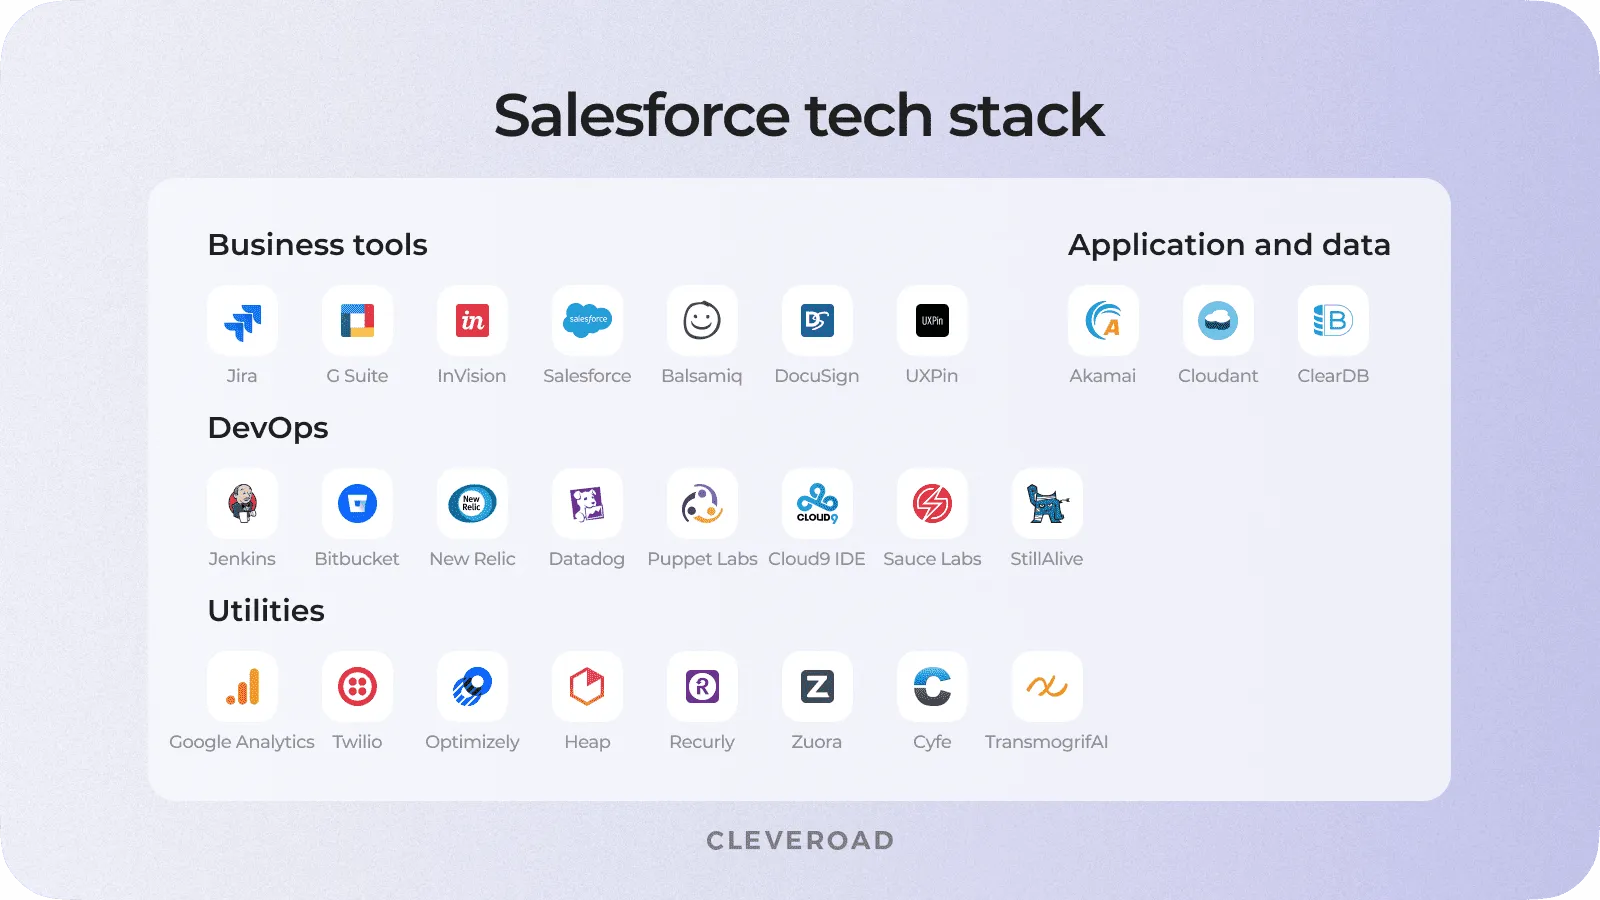 Salesforce tech stack